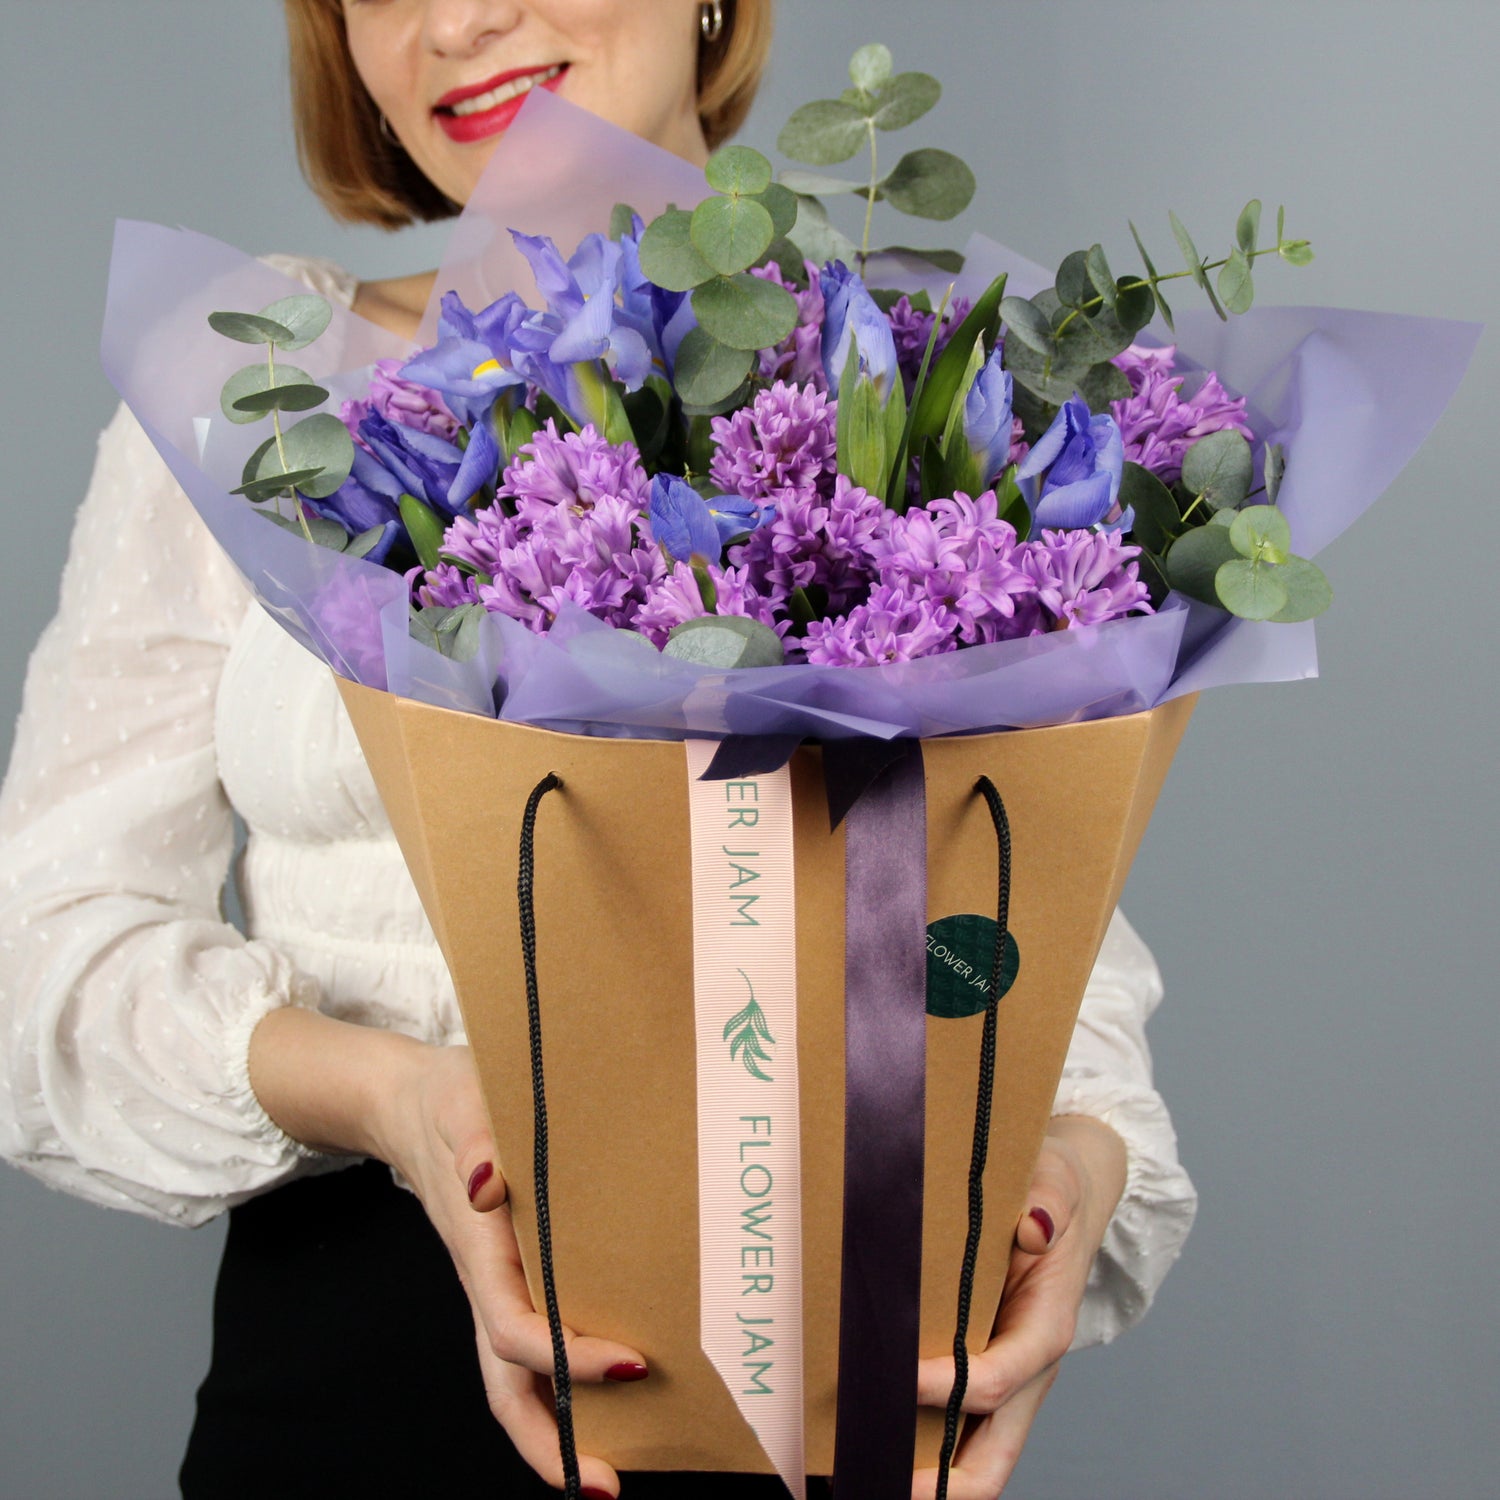 send flowers in Genoa liguria iris hyacinth